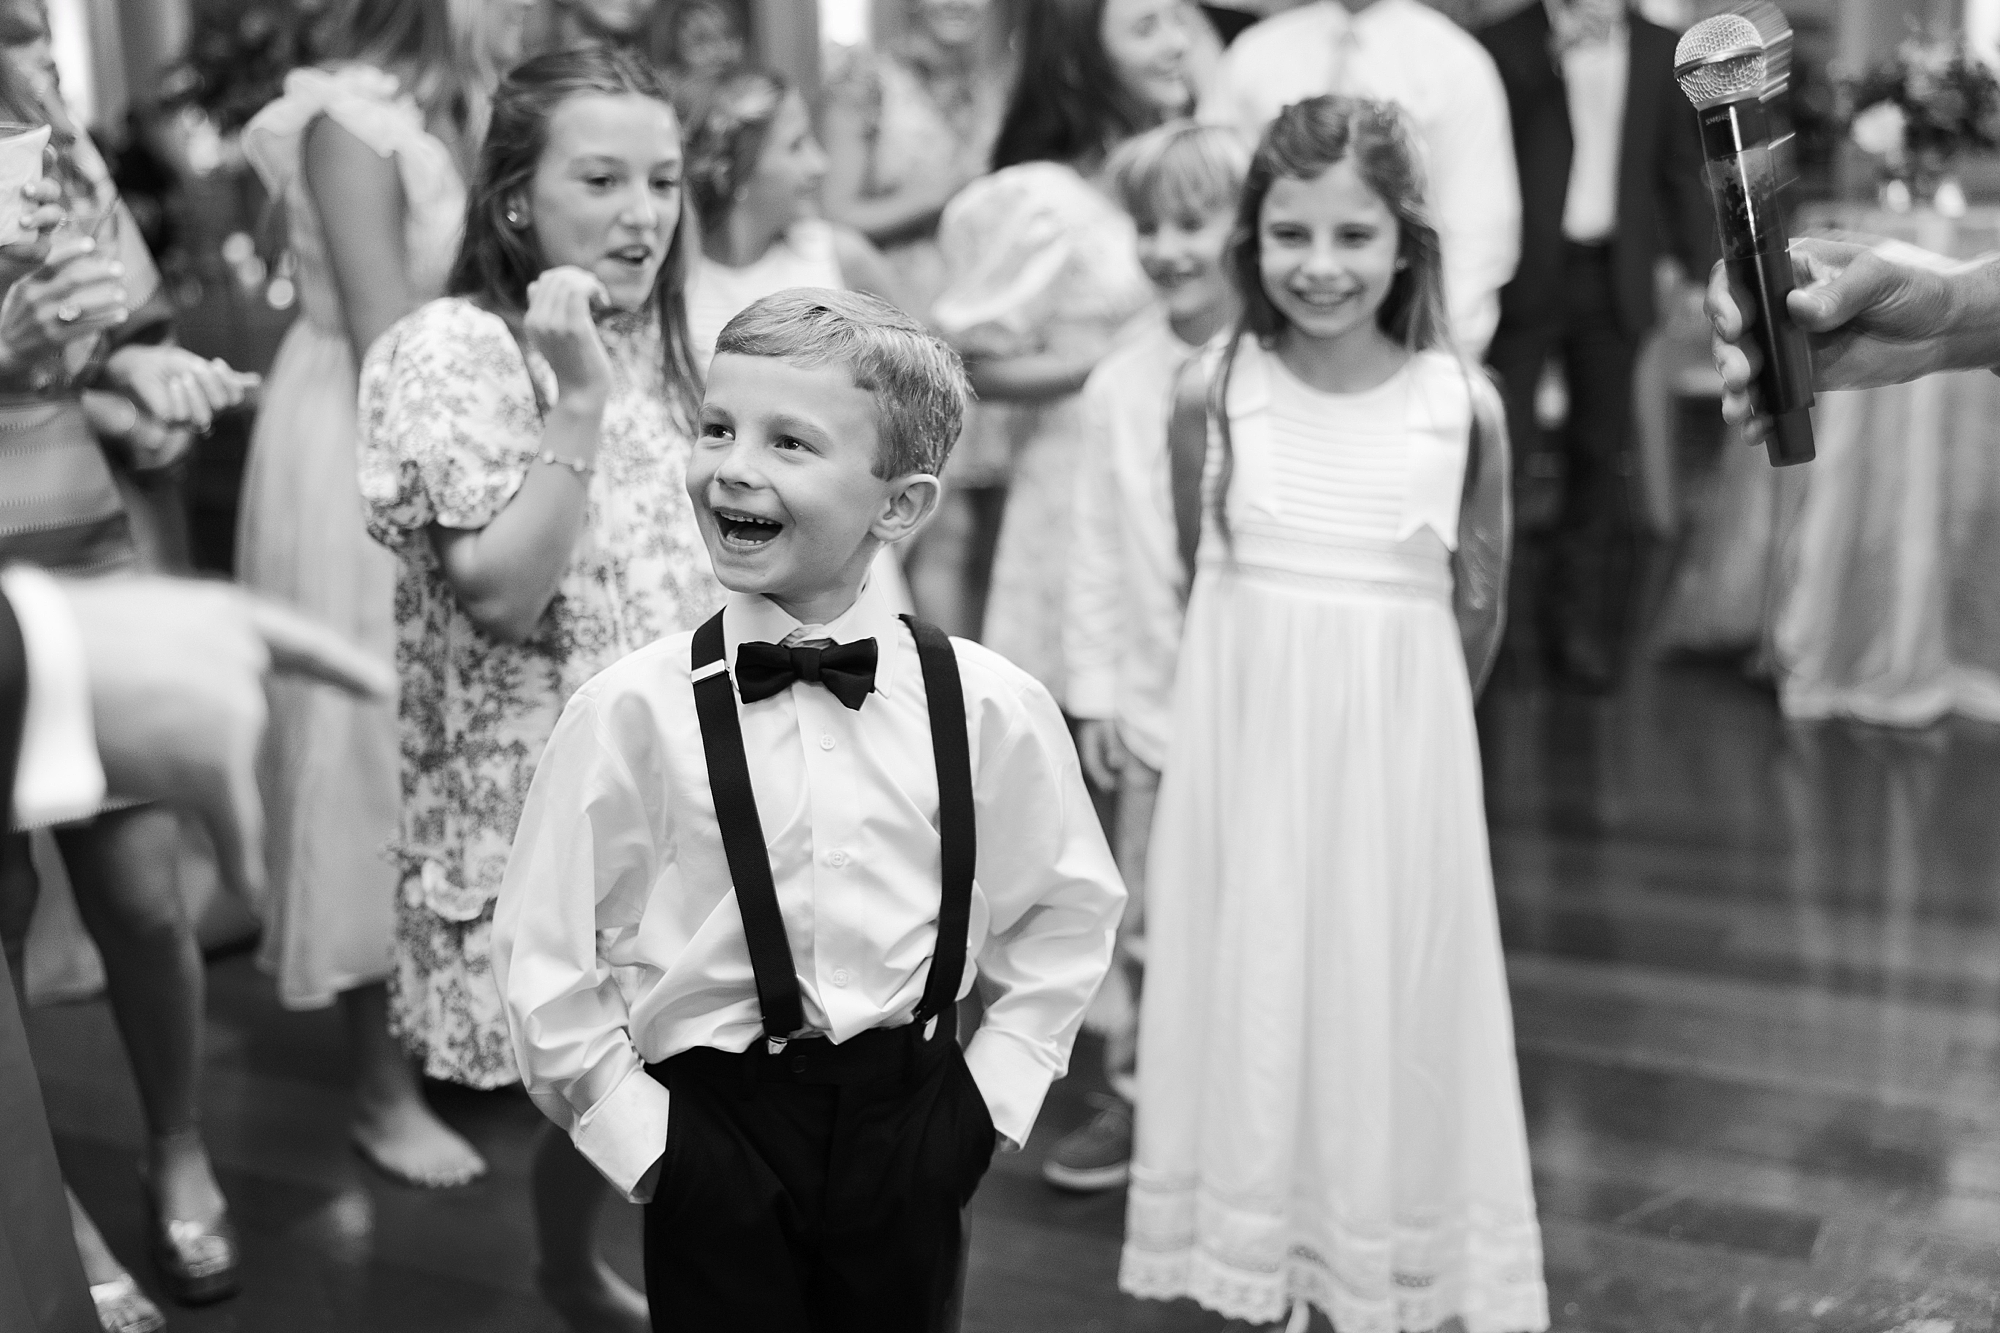 kids dance during NOLA wedding reception at Le Pavilion Hotel